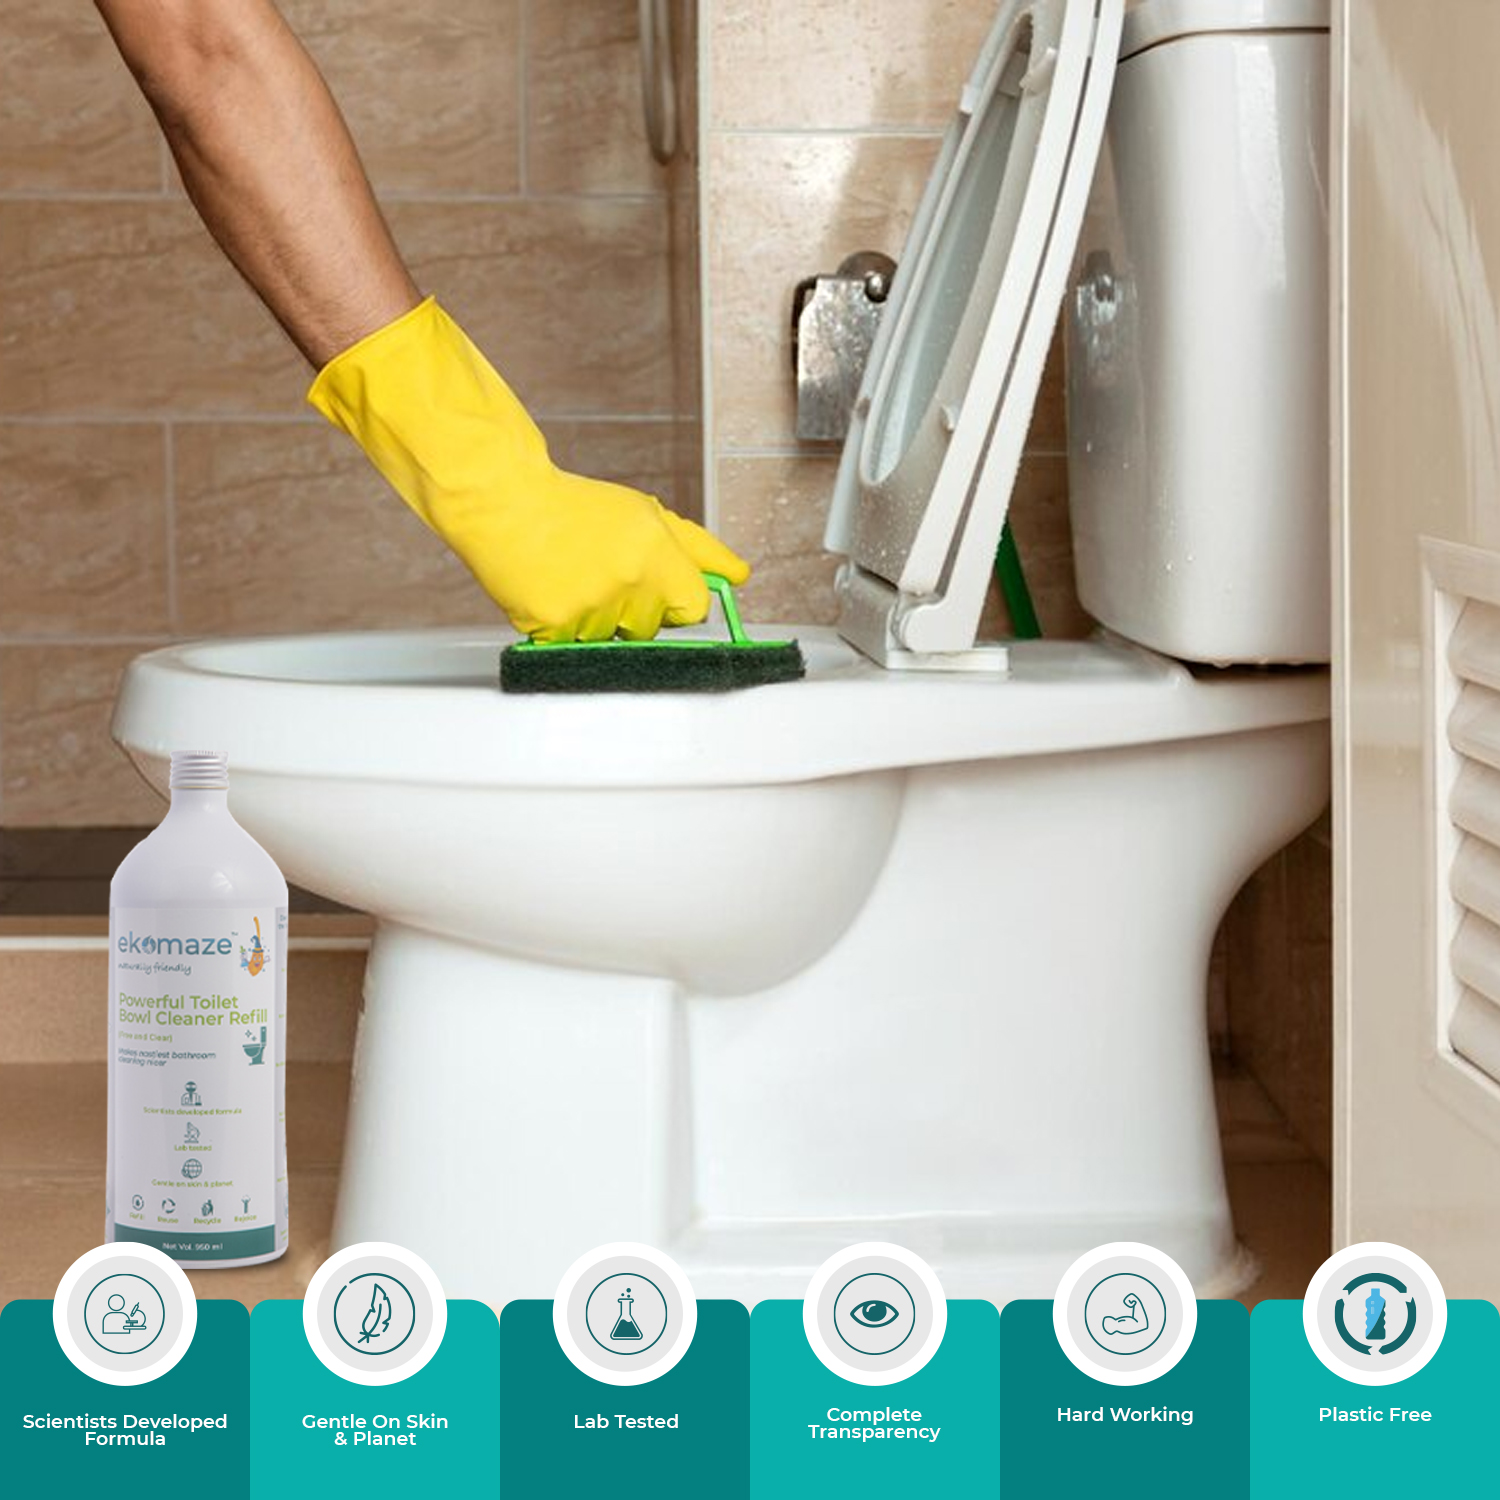 Powerful Toilet Bowl Cleaner Refill | Makes nastiest bathroom cleaning nicer